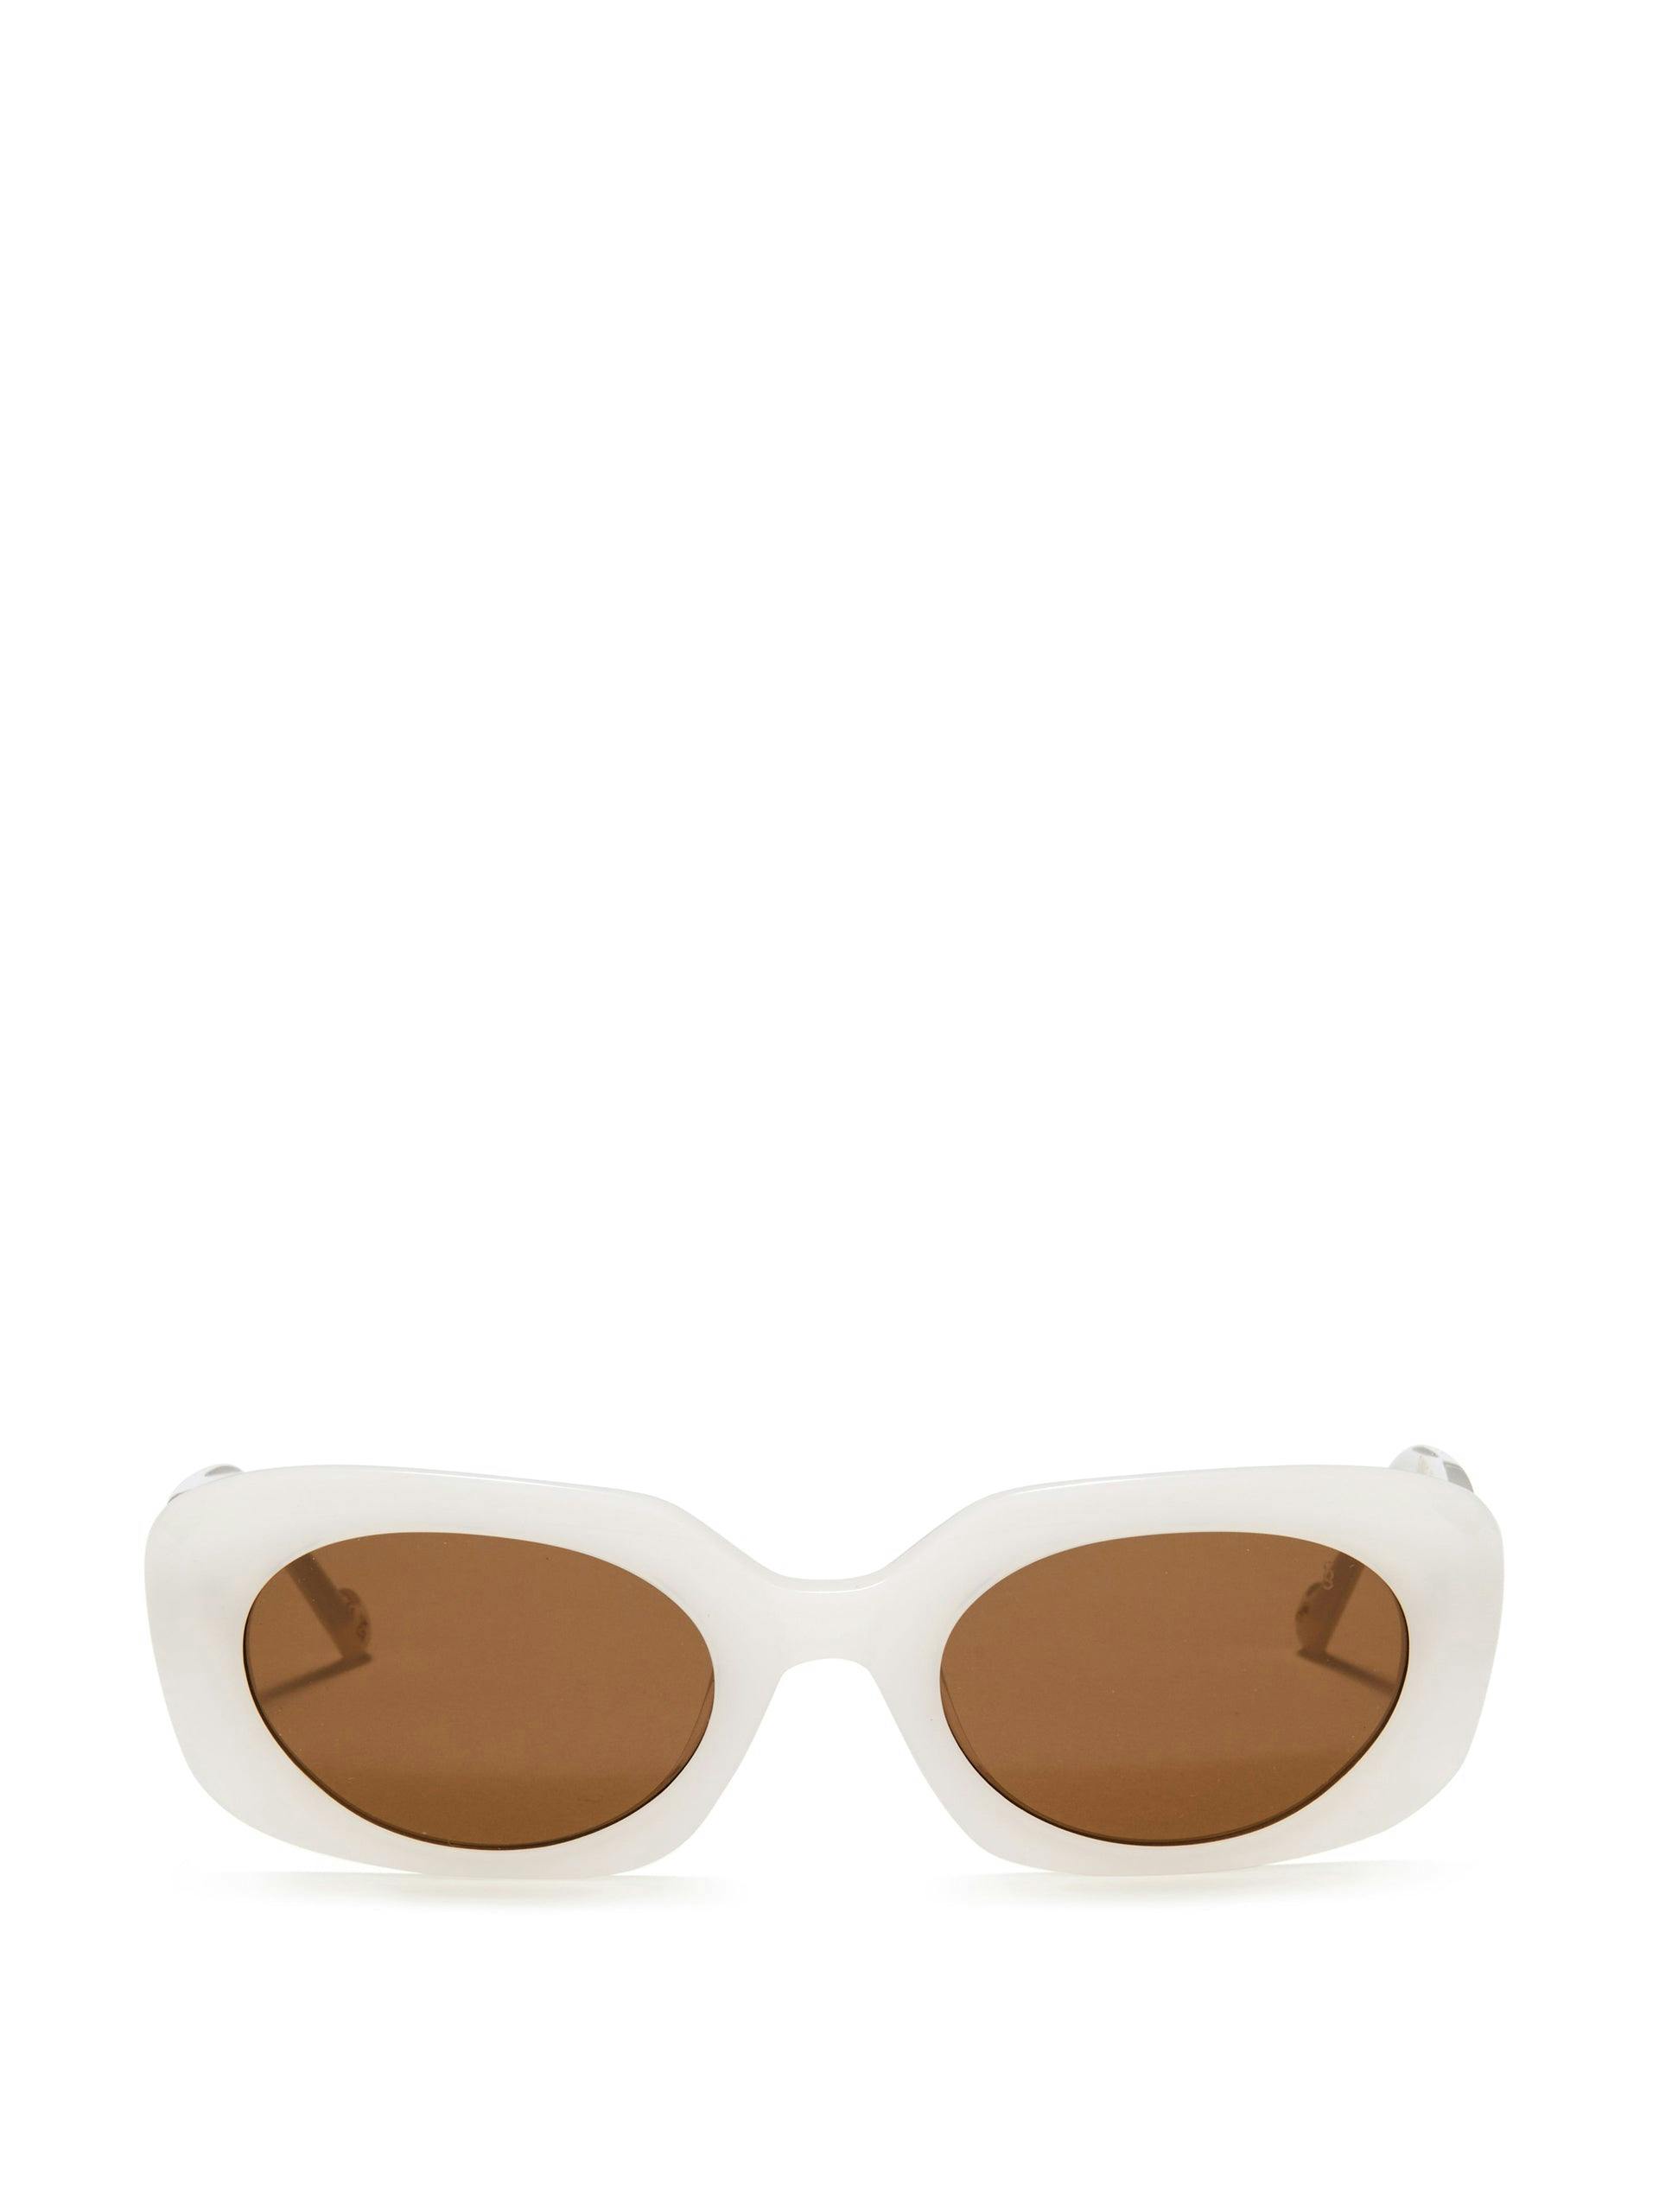 Cindy sunglasses in milky white